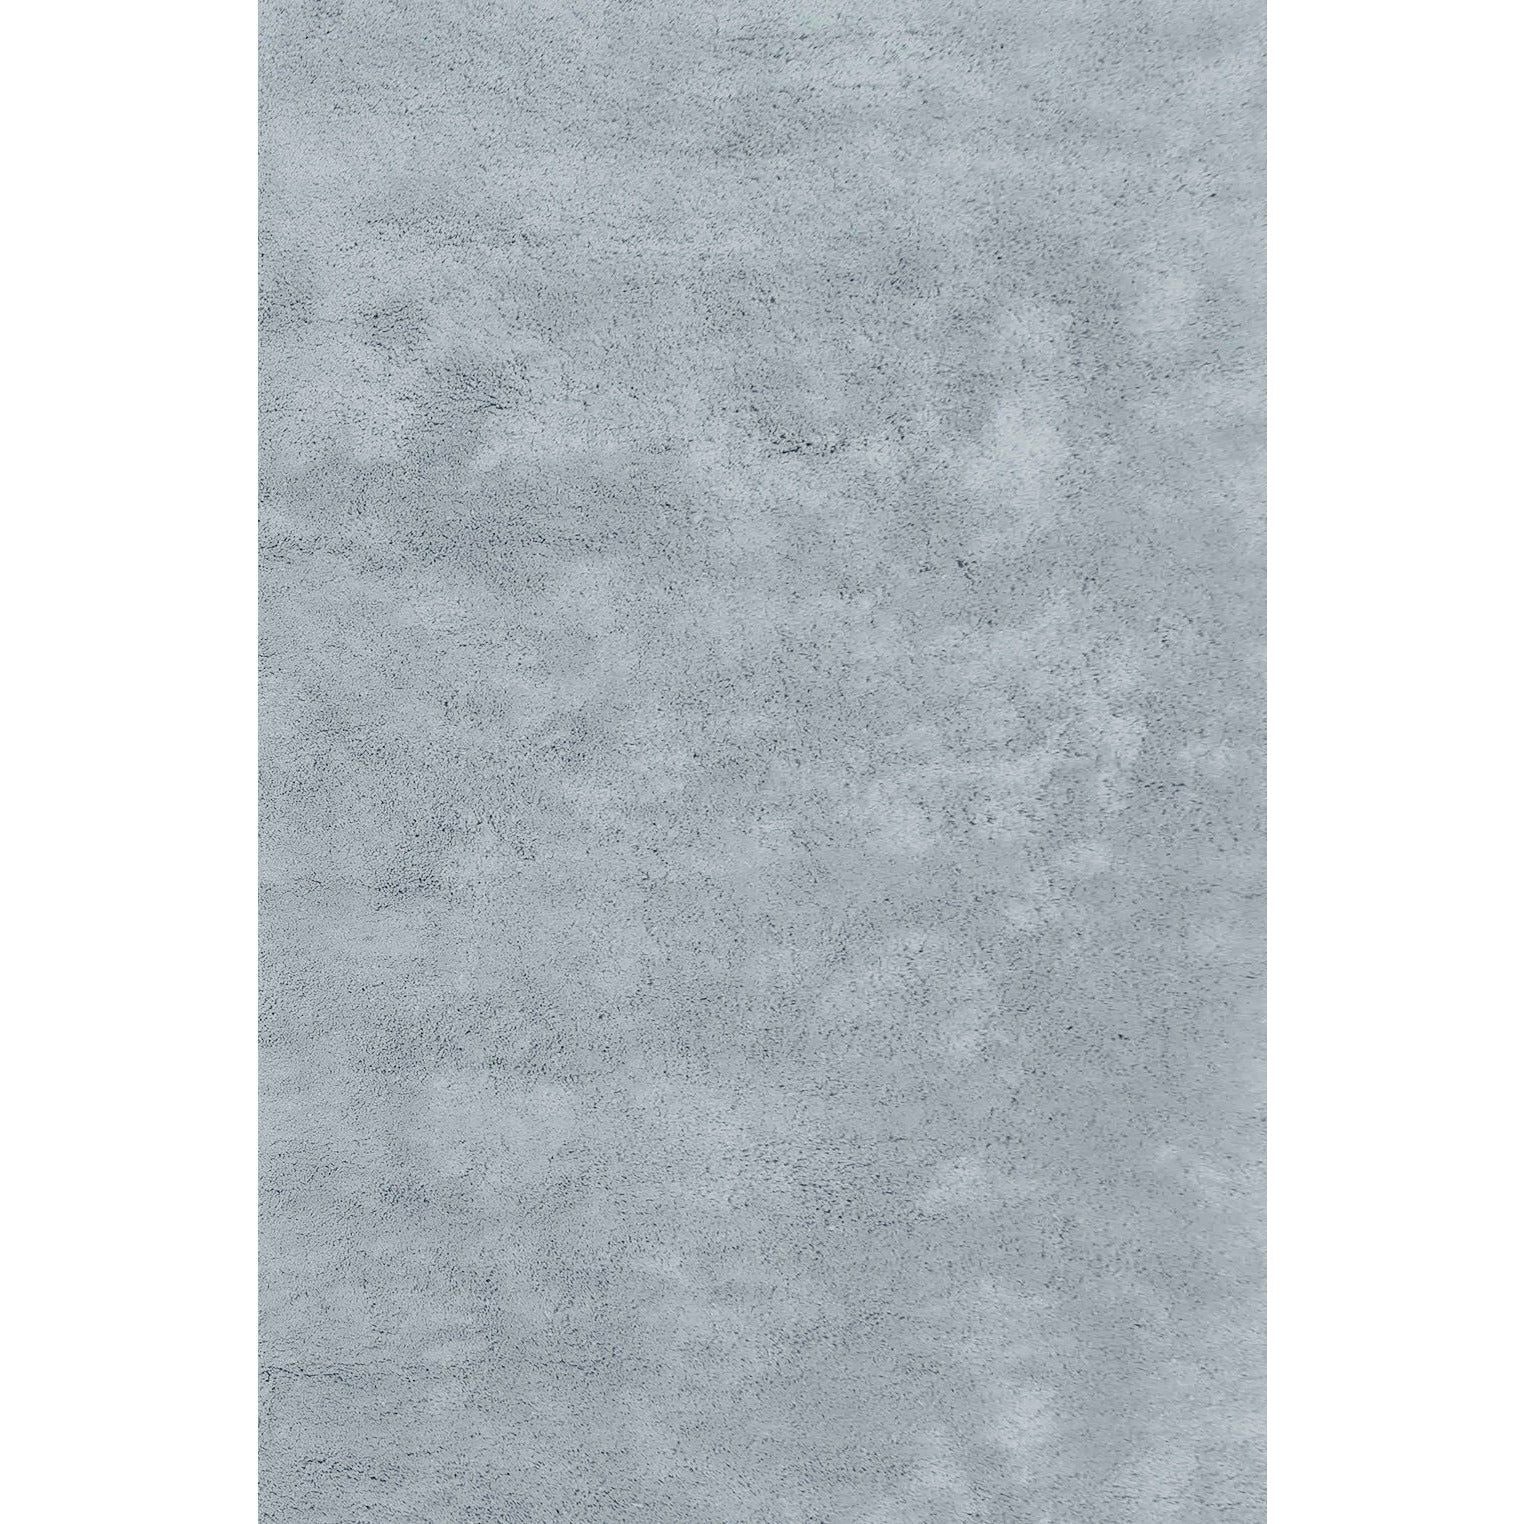 Signature Cotton Shag Light Grey handtufted cotton shag Organic Weave Shop 5x7 